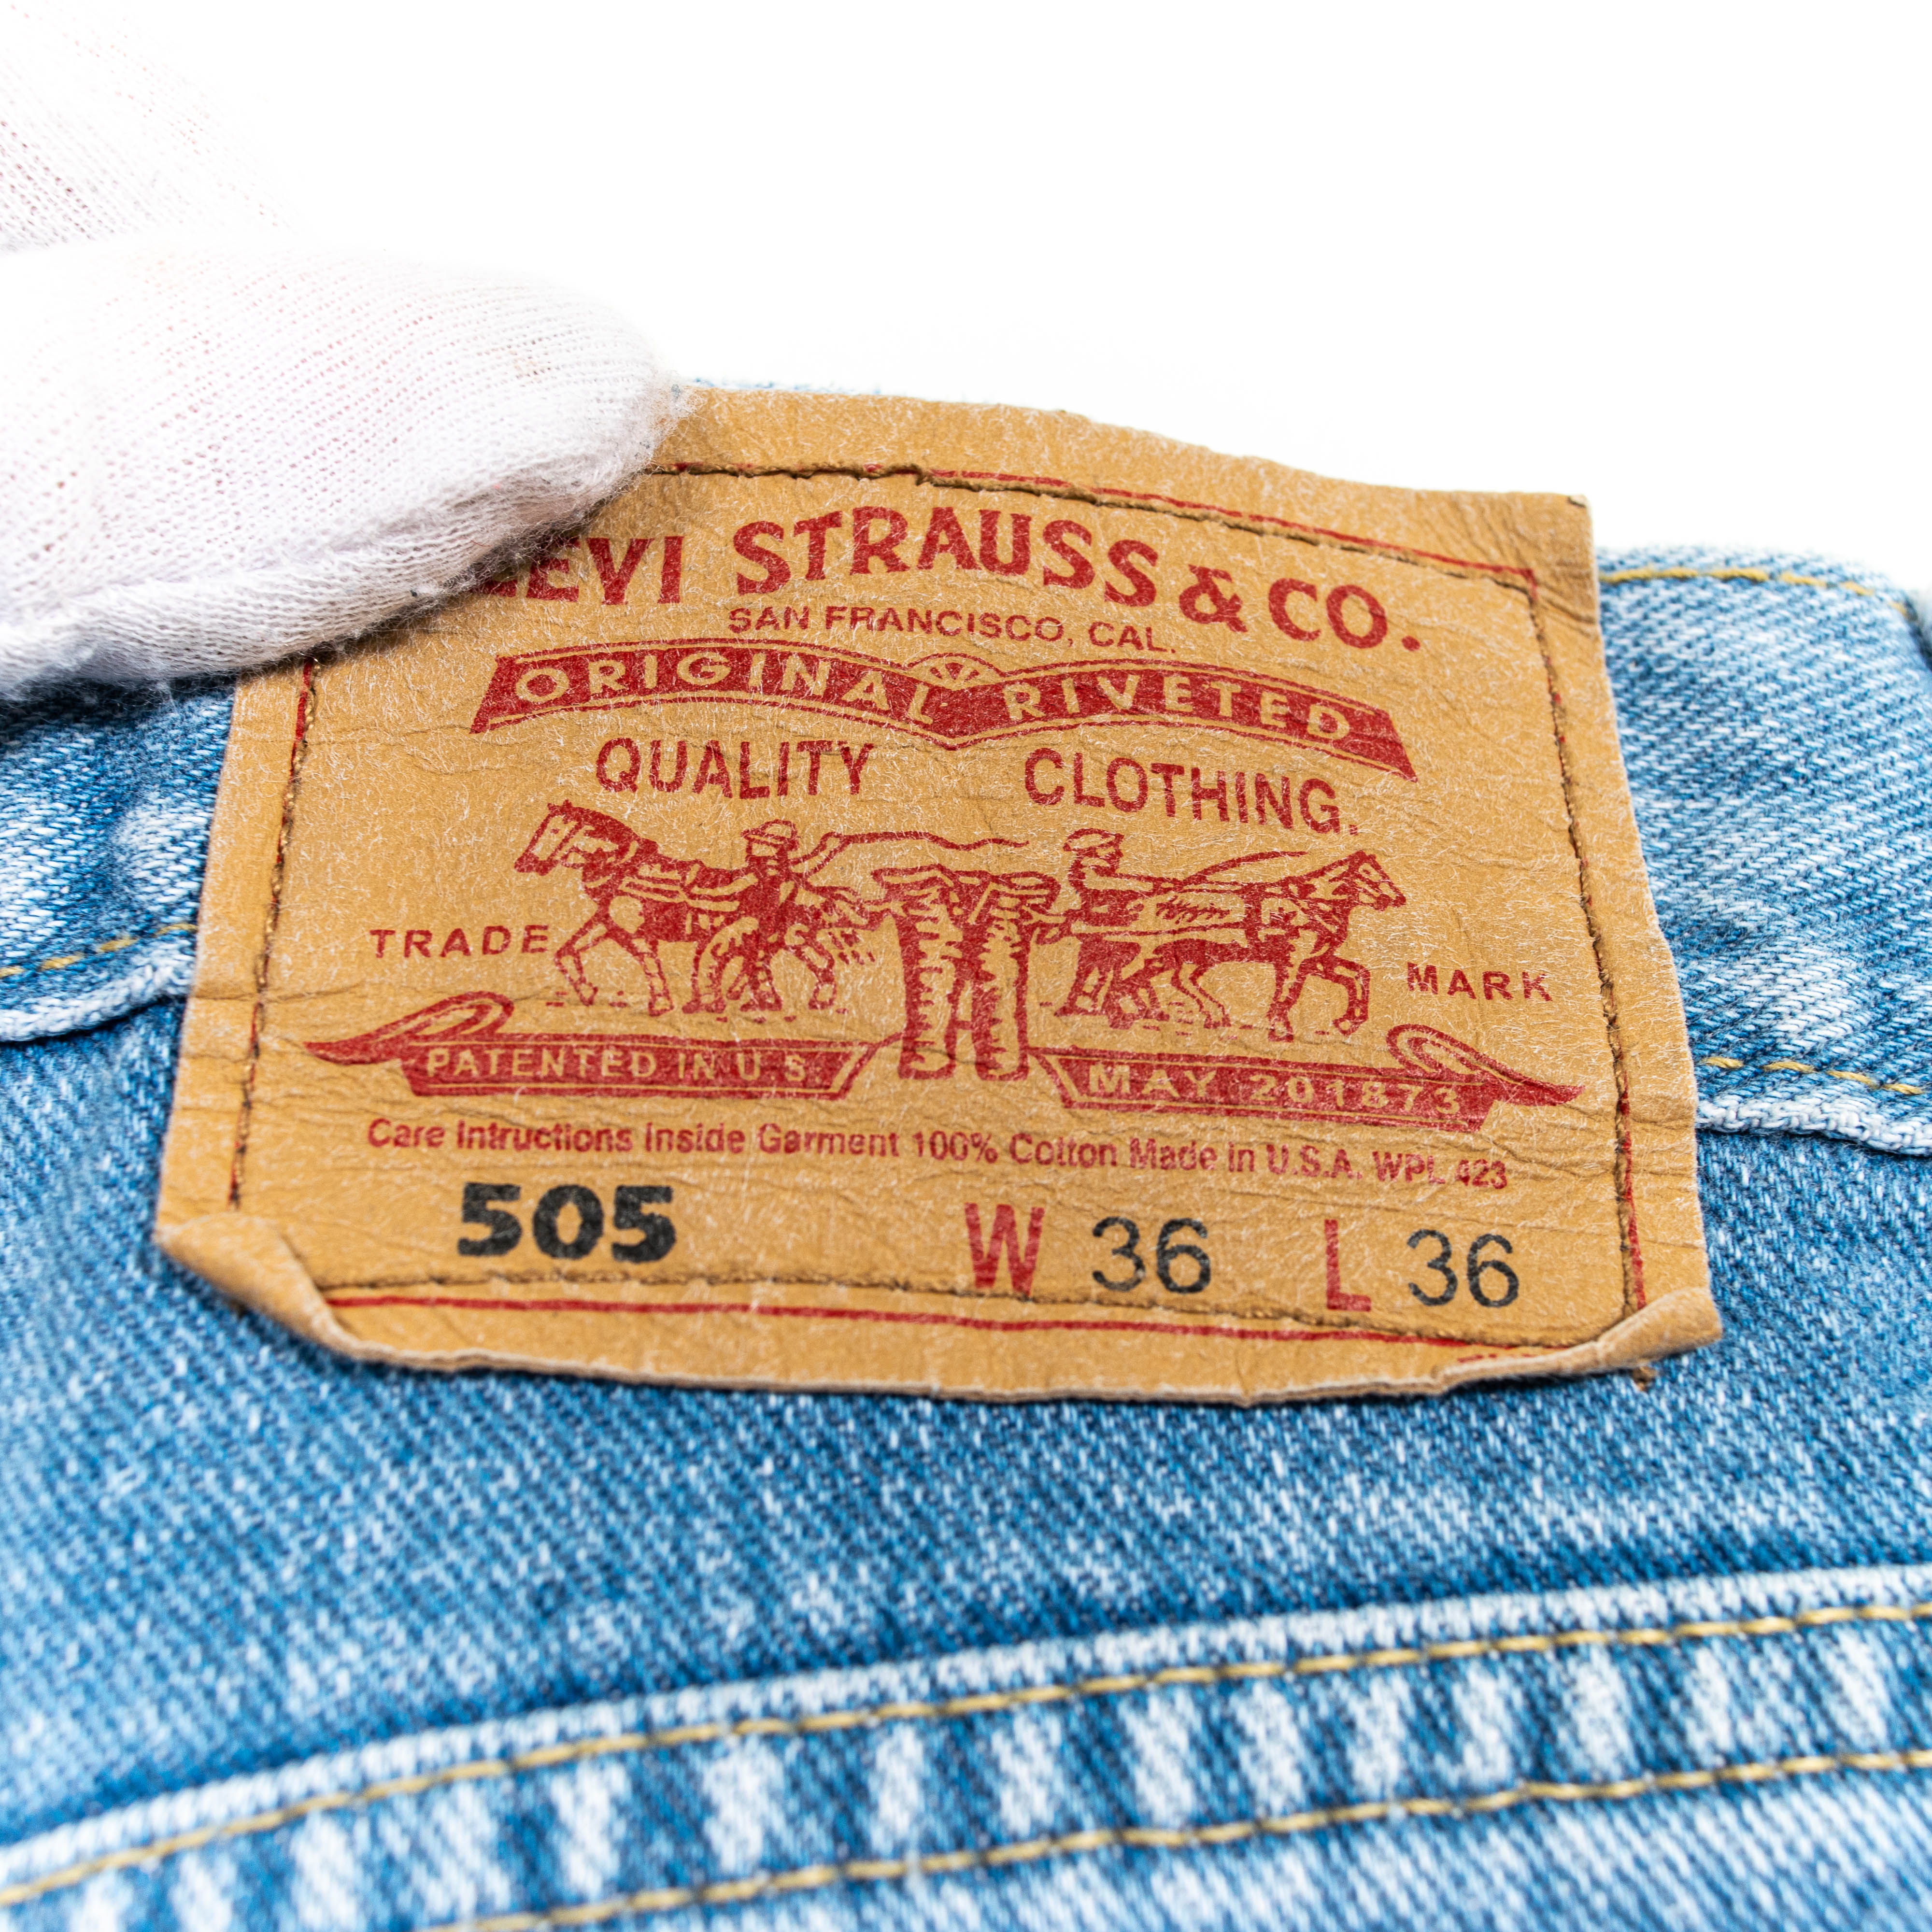 Vintage Levis 505 Light Wash Zip Up Straight Fit Jeans Mens US34